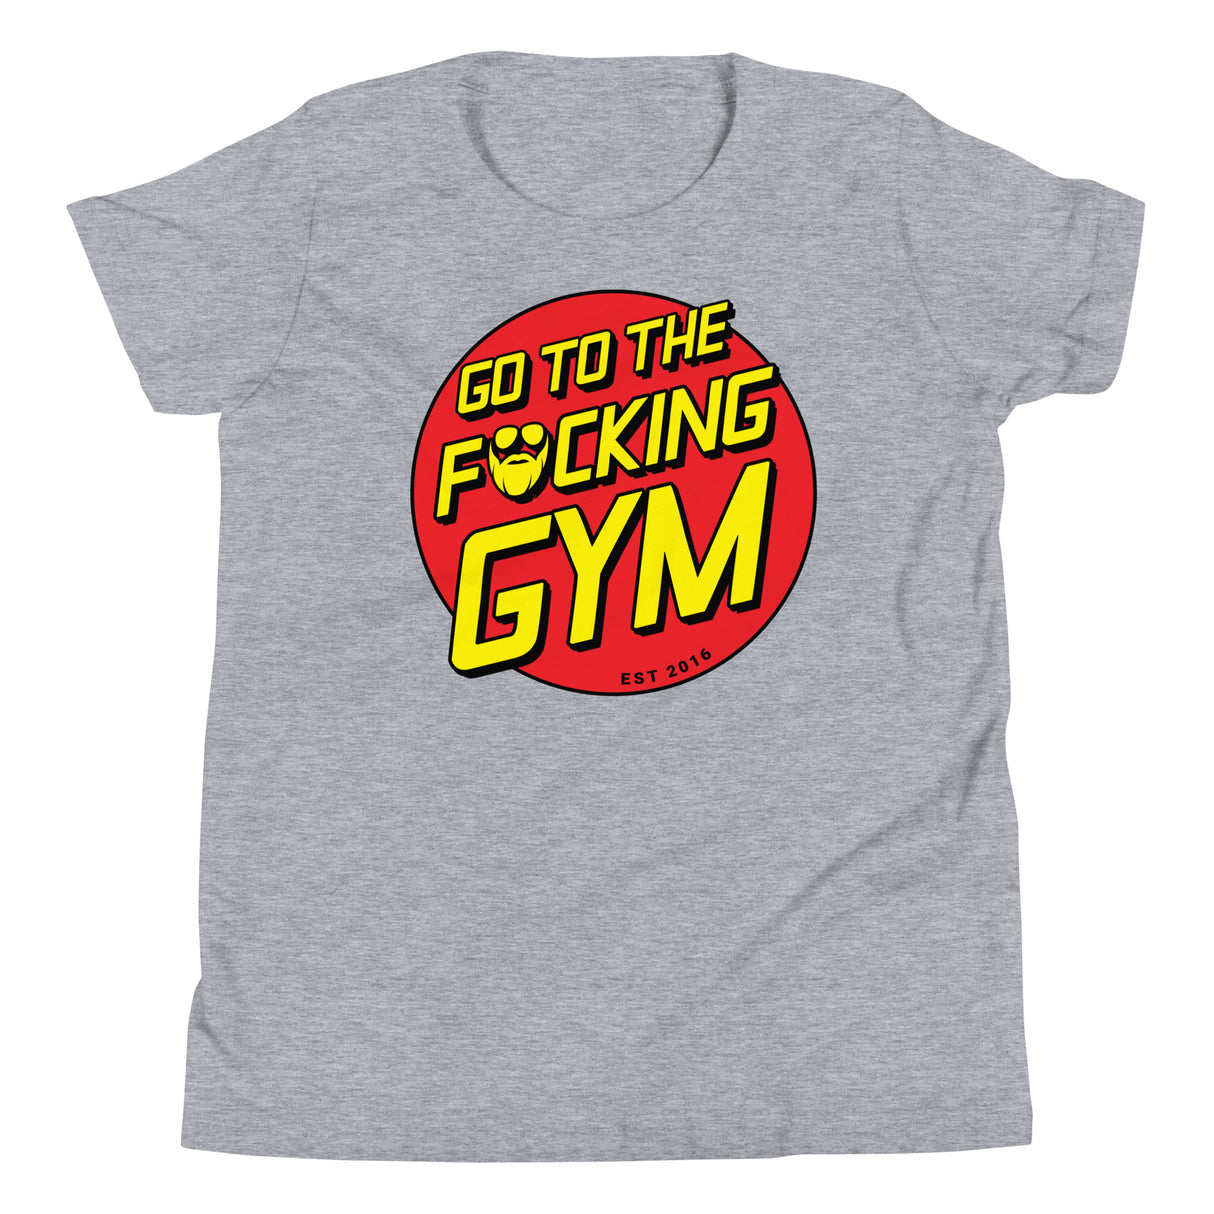 Go To The F*cking Gym (Santa Cruz) Kids T-Shirt